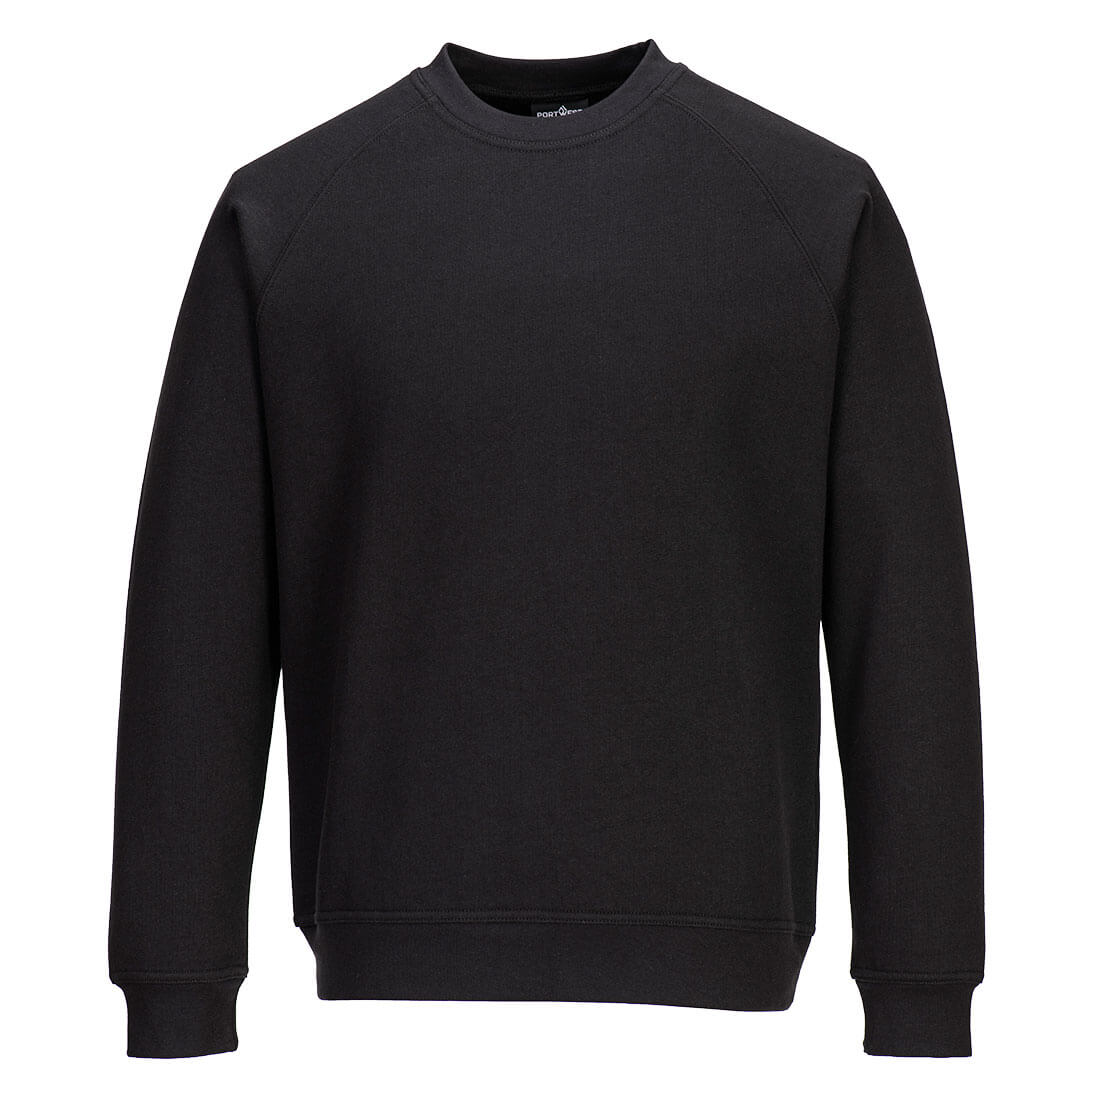 Women's Sweatshirt B330 Black Size L Fit R